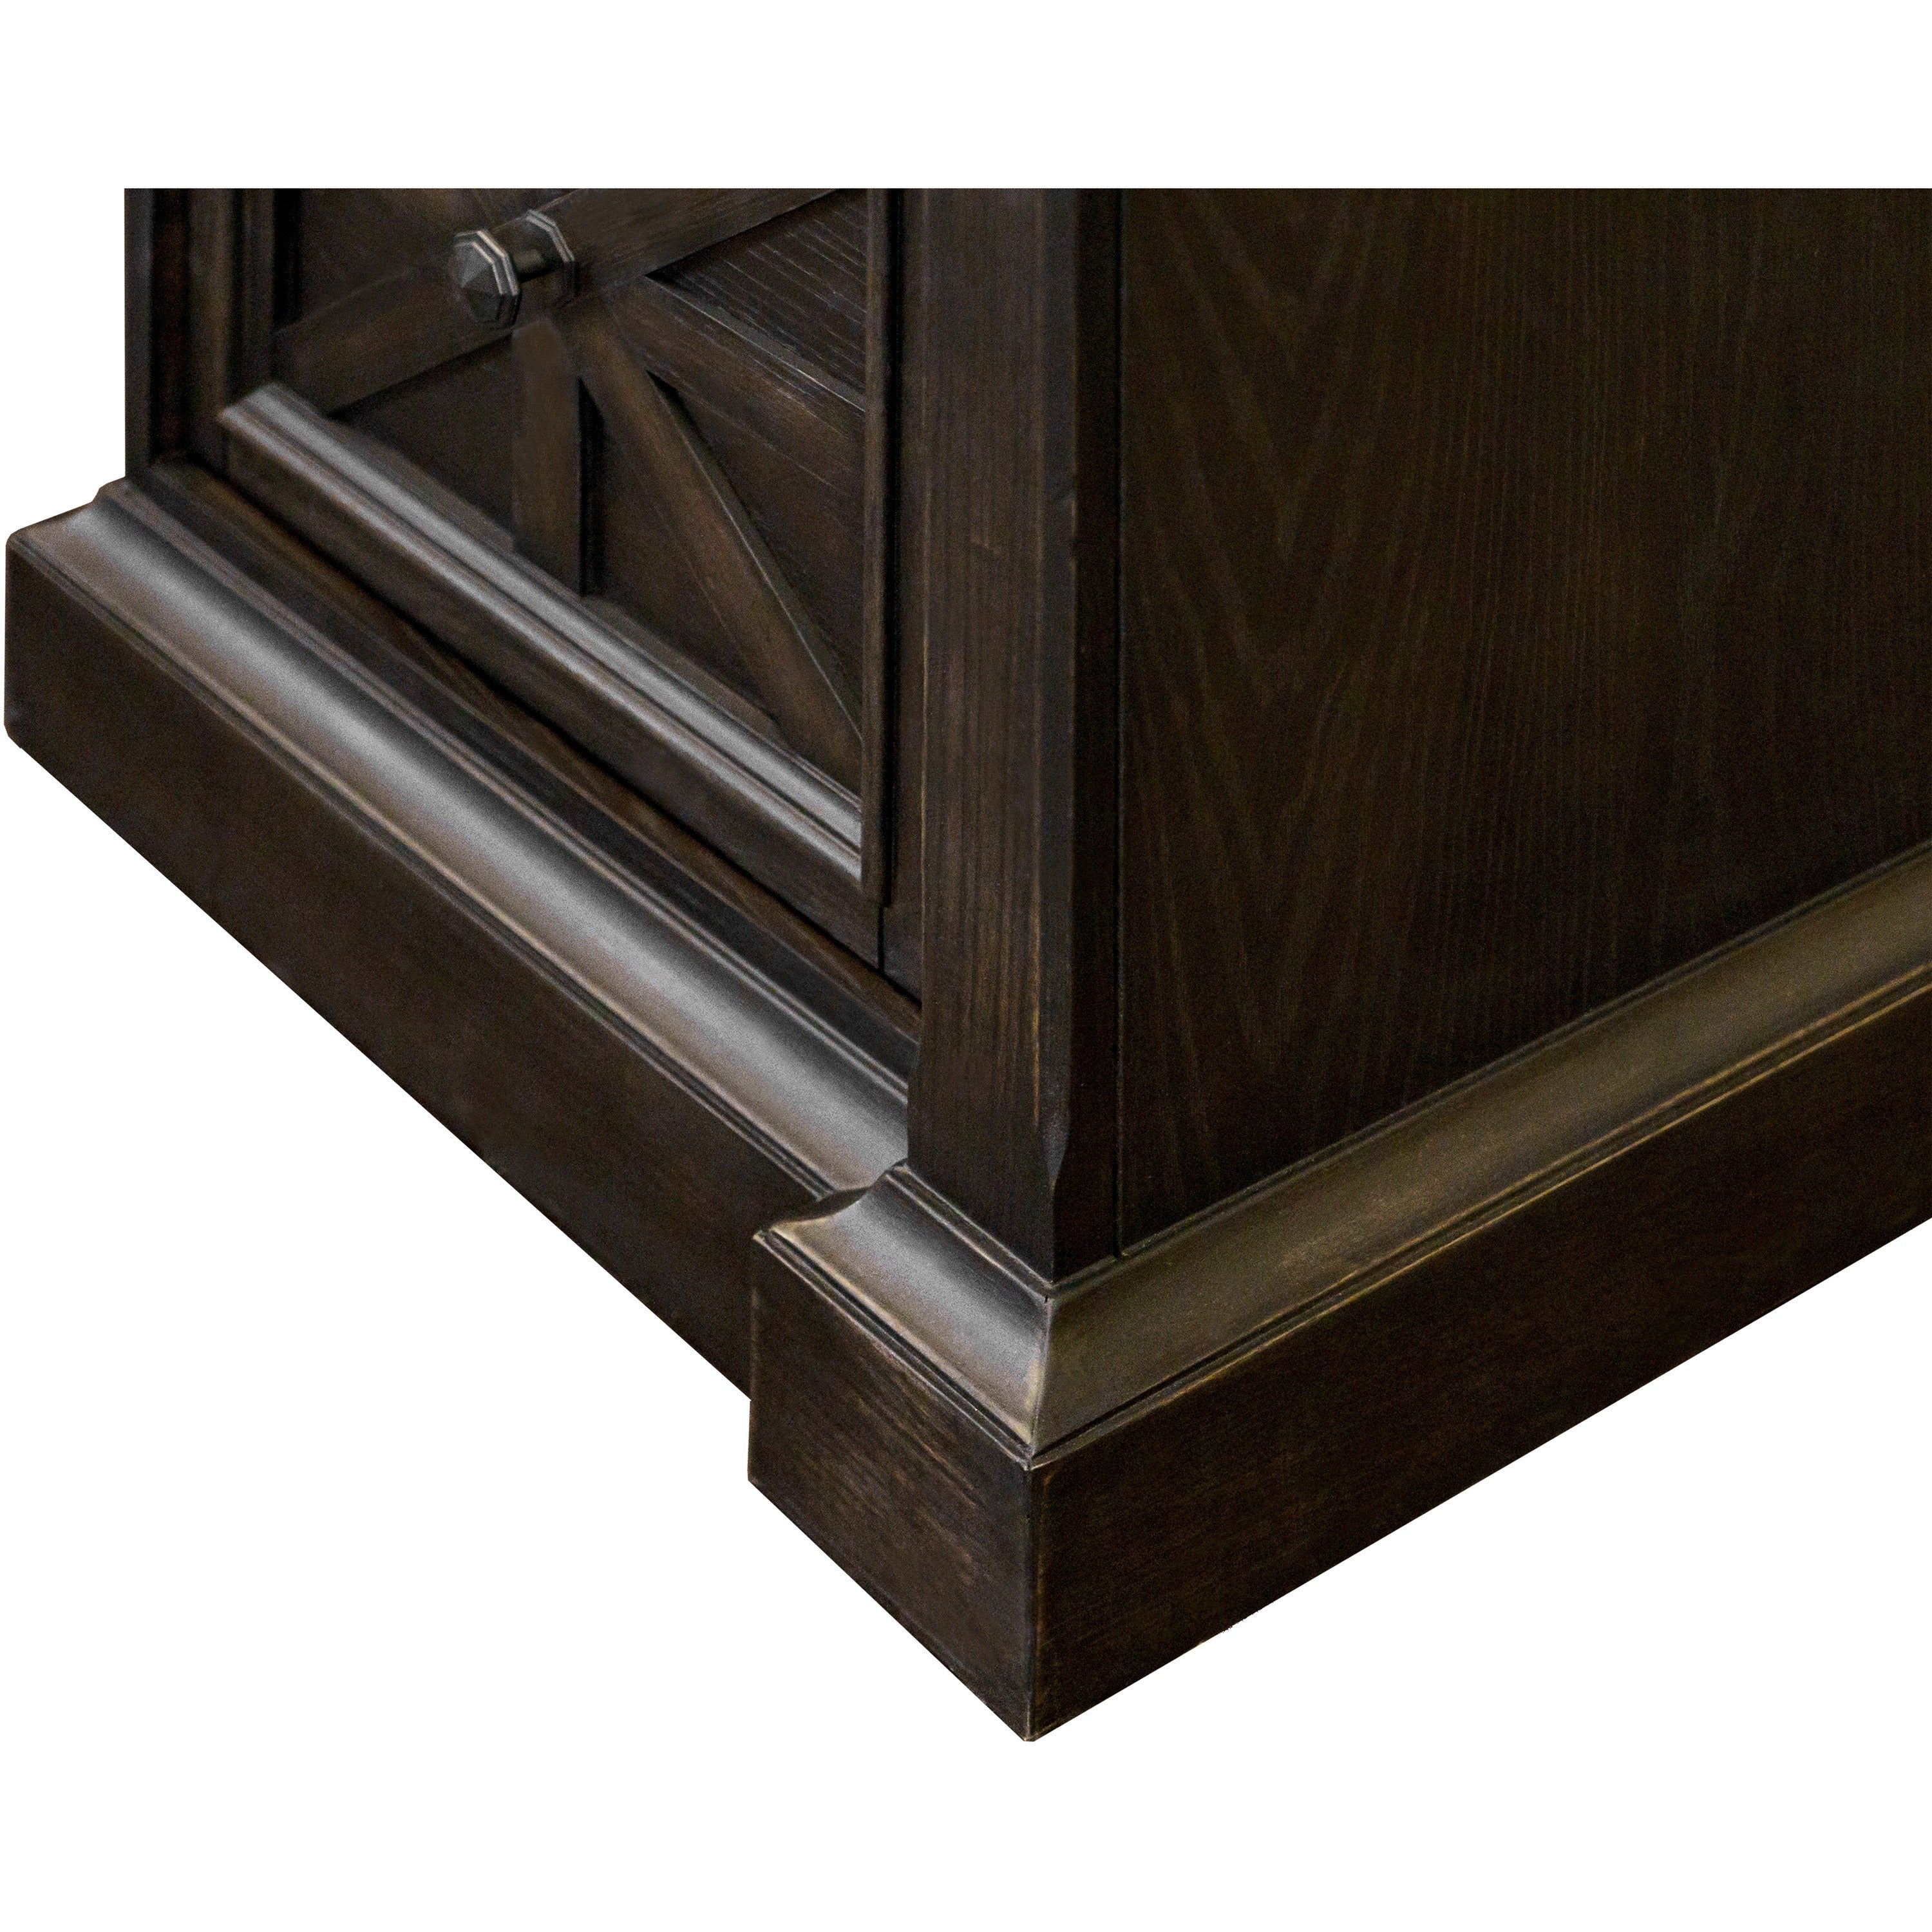 martin-kingston-office-desking-unit-66-x-2230-7-x-utility-file-drawers-material-wood-finish-dark-chocolate-rub-through_mrtimkn689 - 2